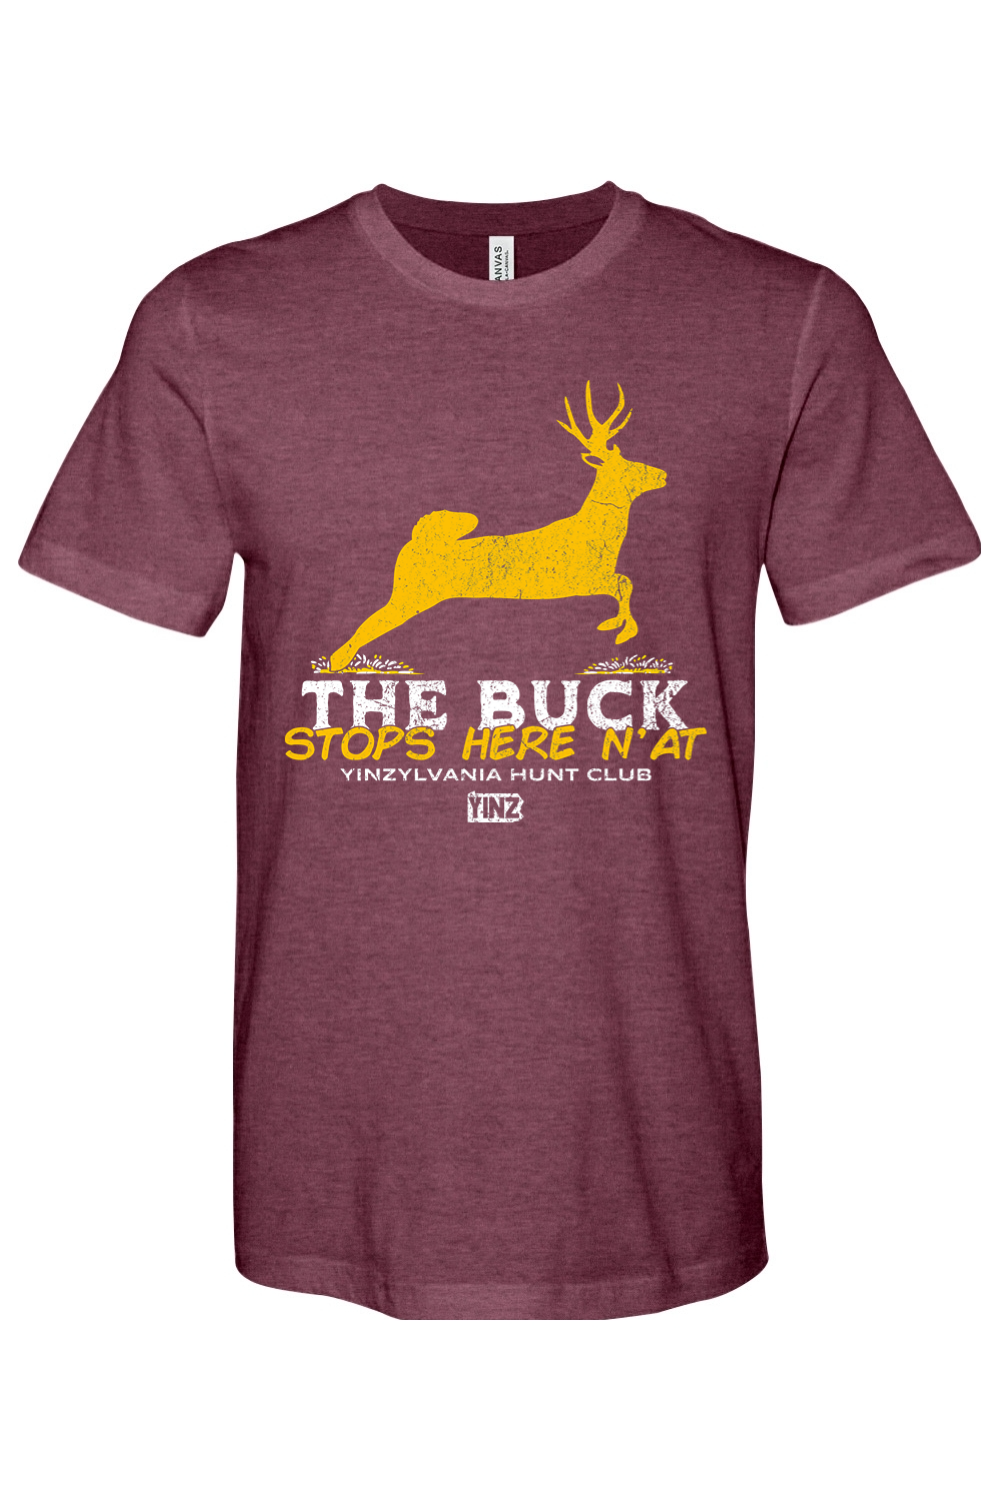 The Buck Stops Here N'at - Yinzylvania